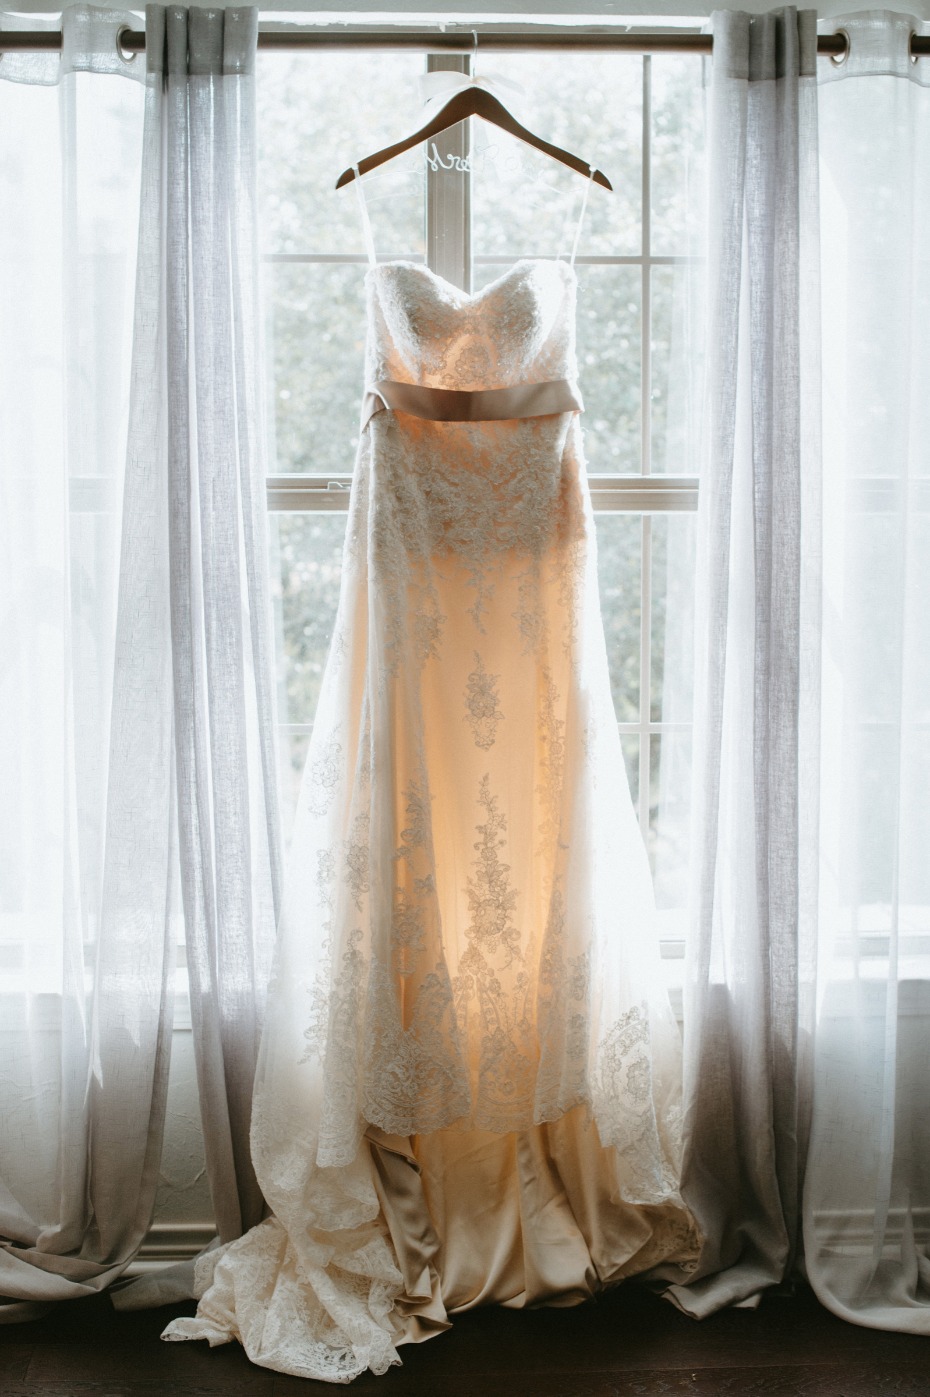 Strapless wedding dress with champagne underlay